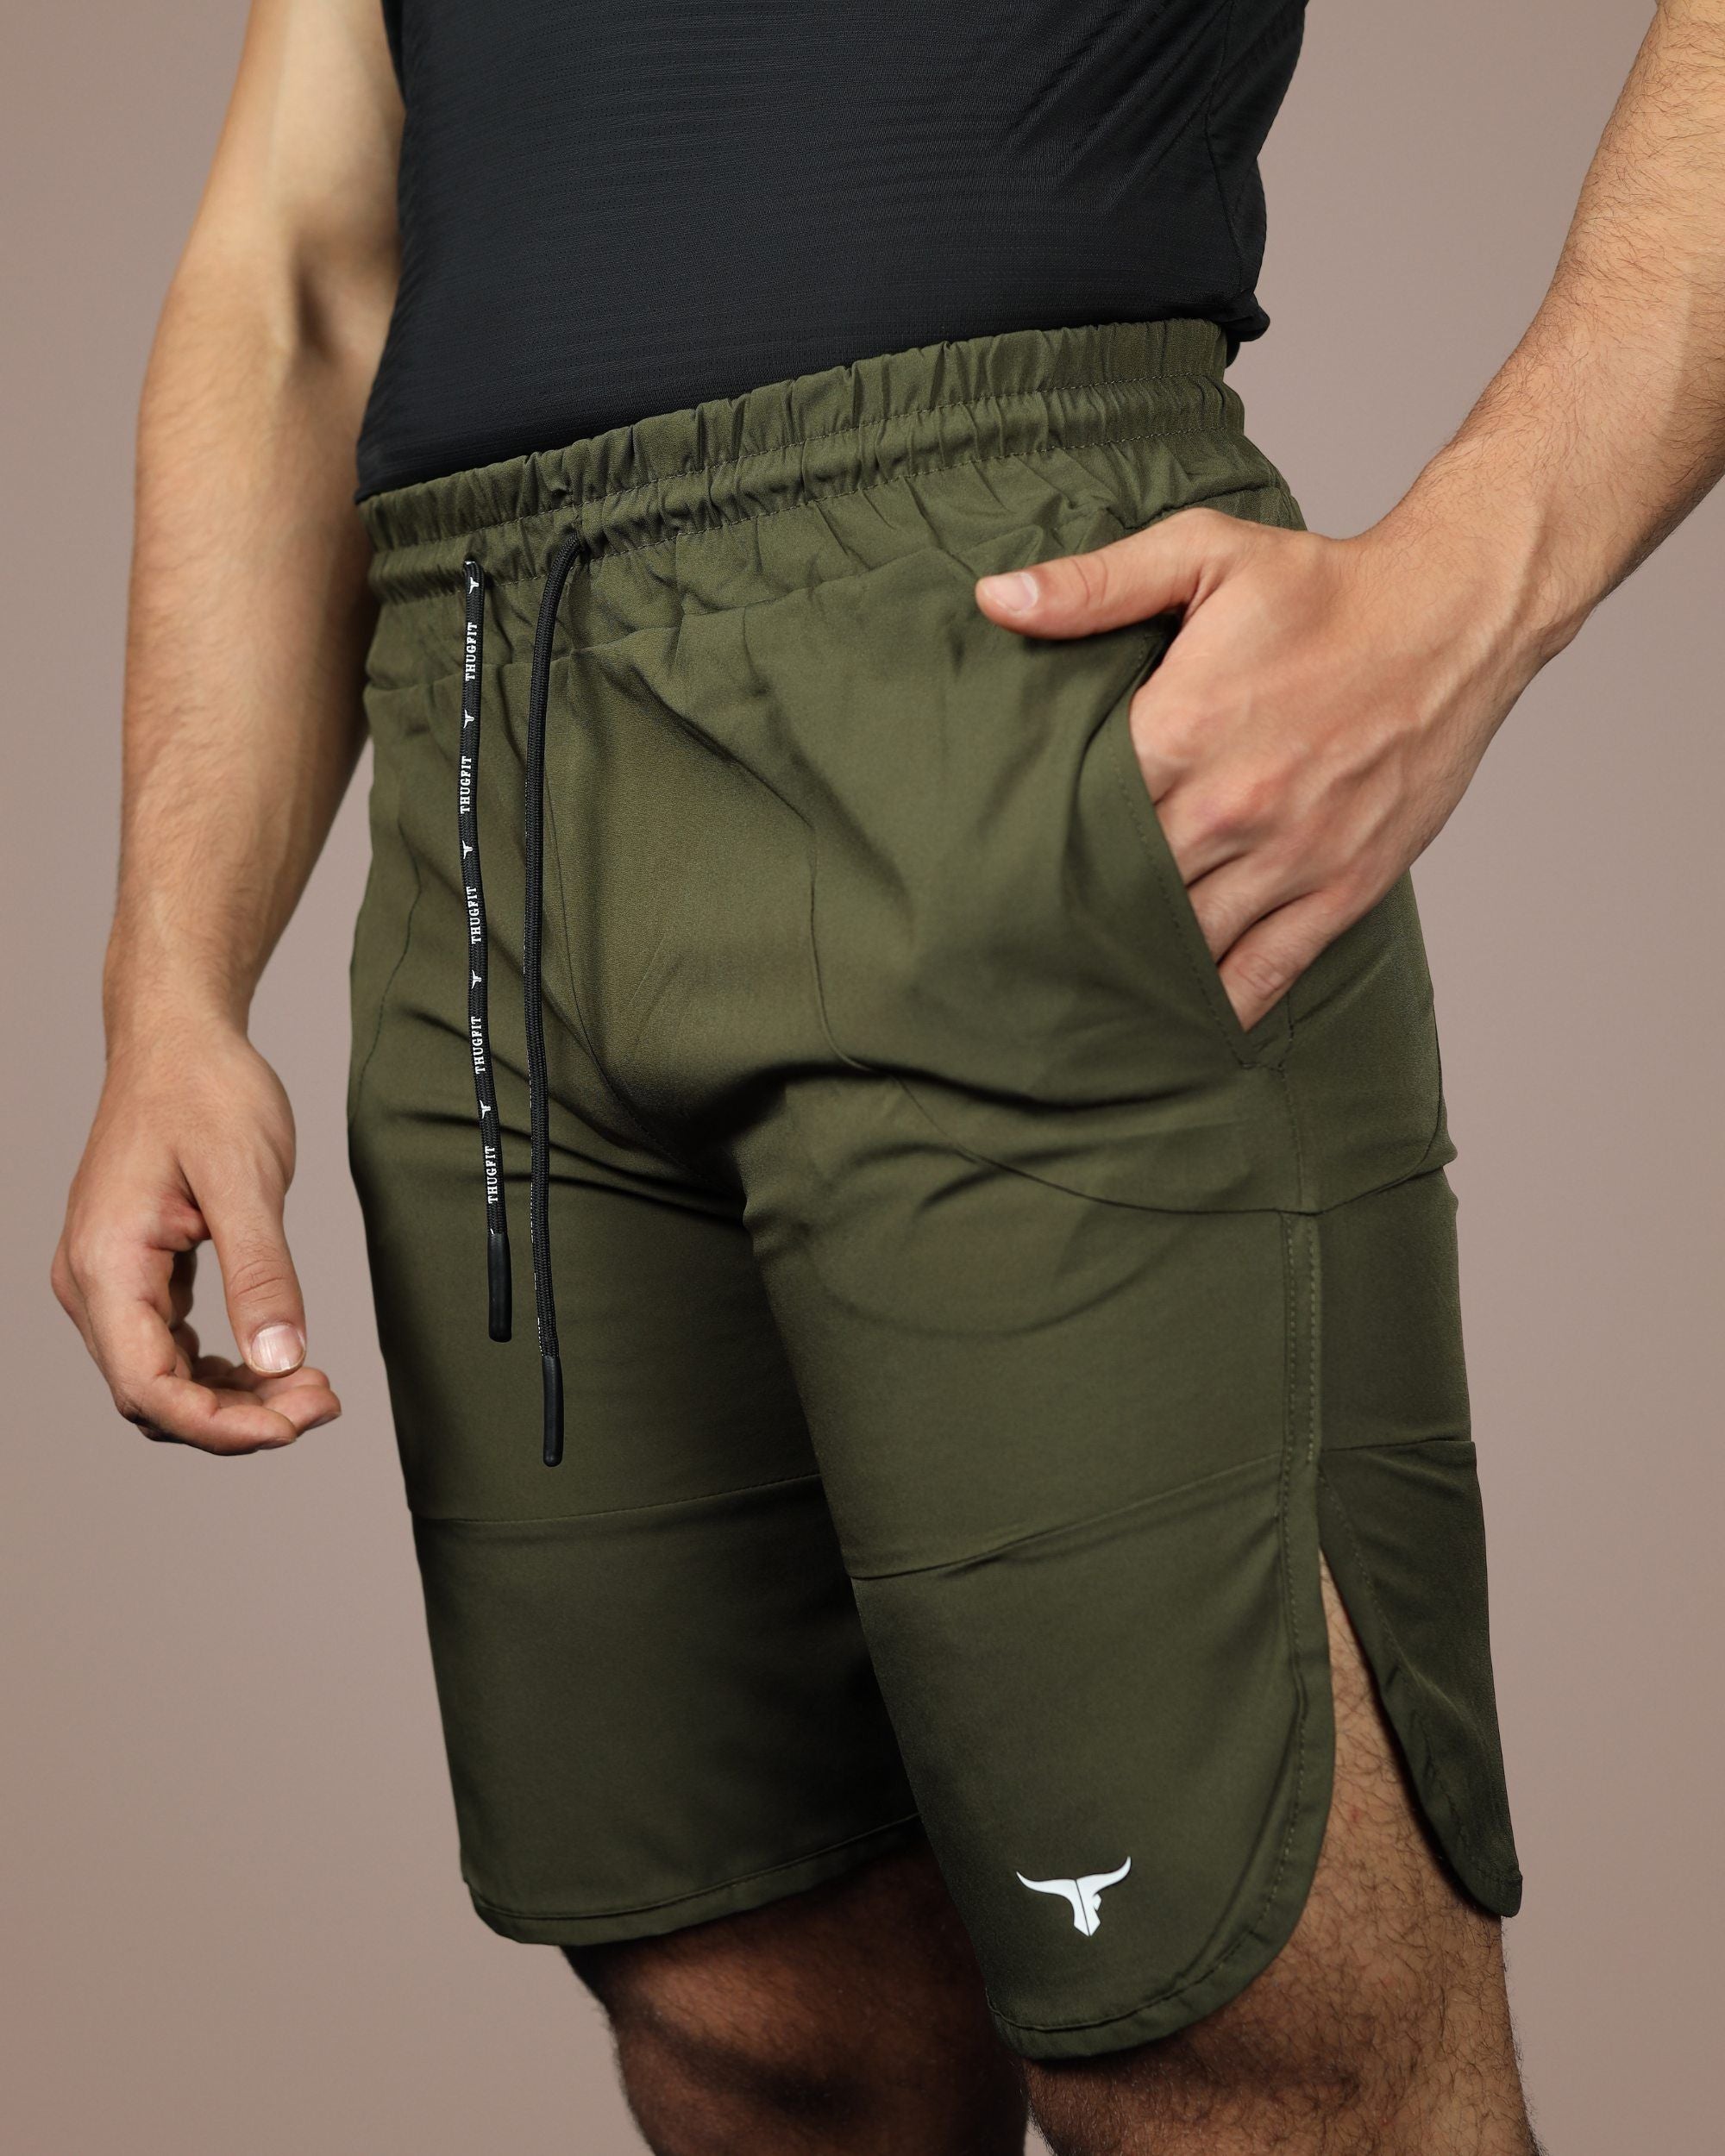 THUGFIT BlackHawk High-performance Men's Shorts (9" Inseam)- Dark Moss Green - THUGFIT